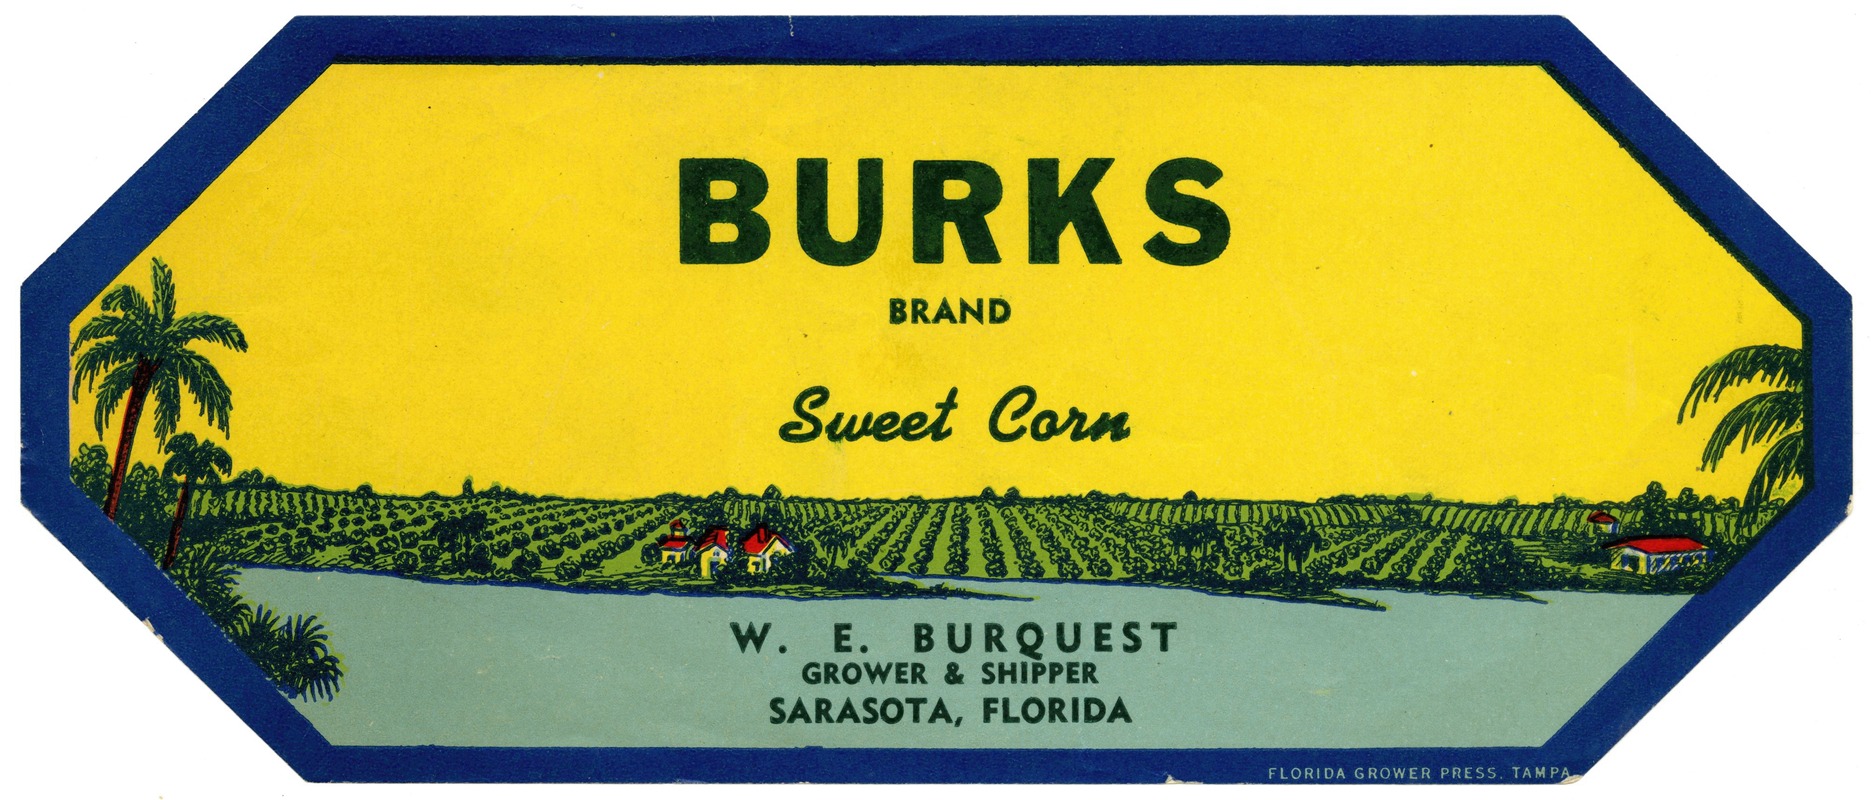 Anonymous - Burks Brand Sweet Corn Label